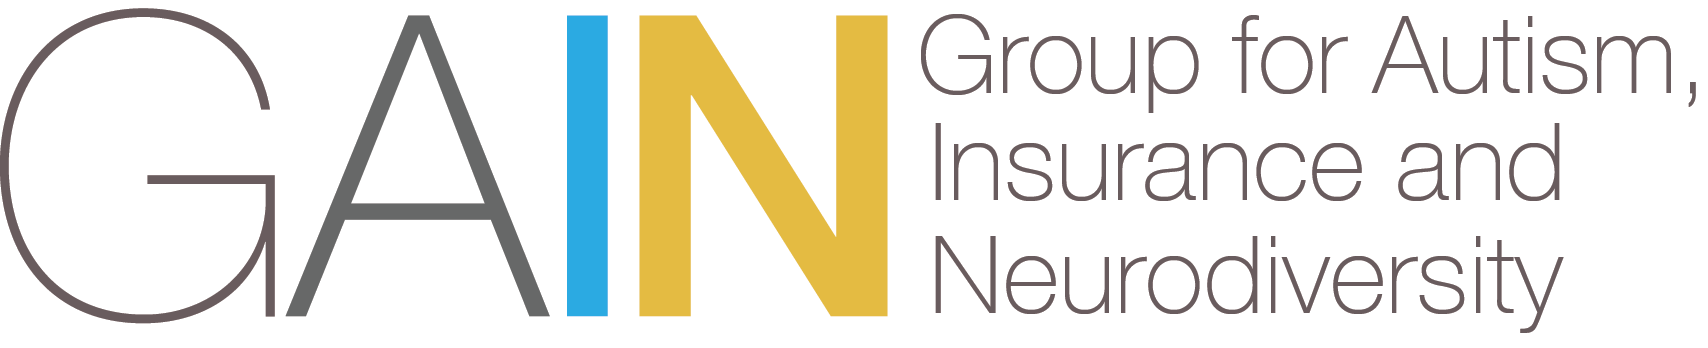 Gender inclusion network logo